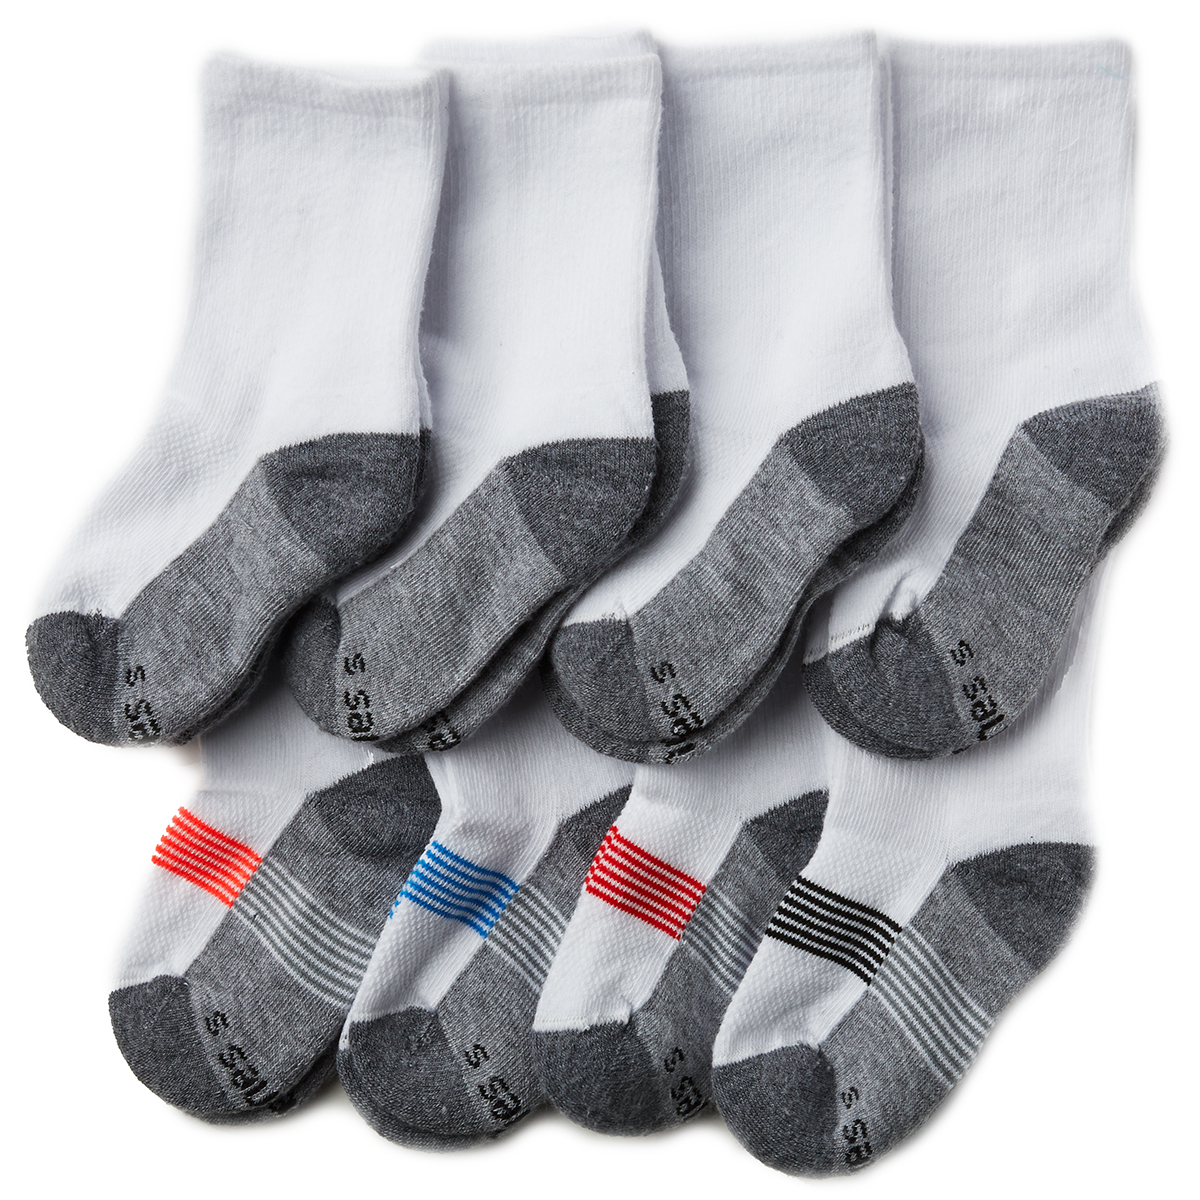 Hanes Boys' Ultimate Crew Socks, 8-Pack